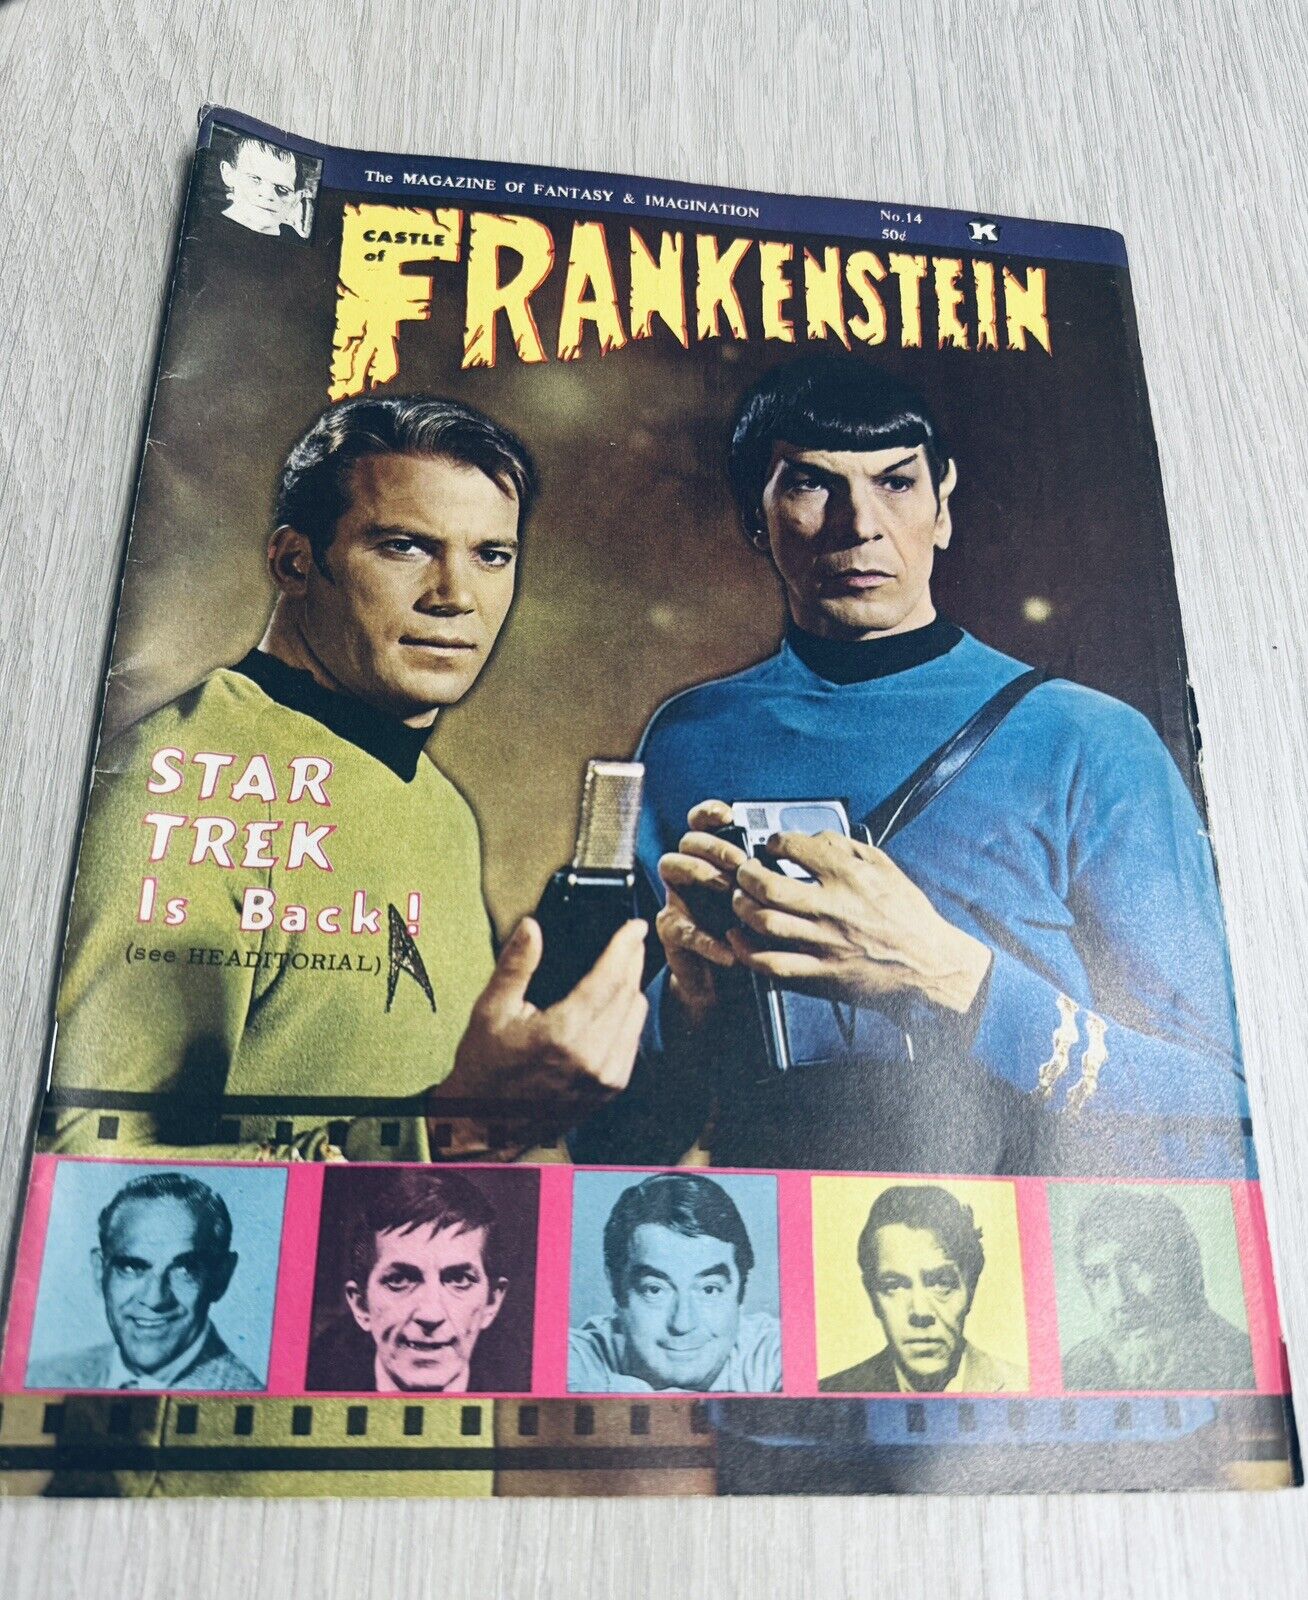 Castle of Frankenstein Magazine (1969) Star Trek and Ray Bradbury Interview